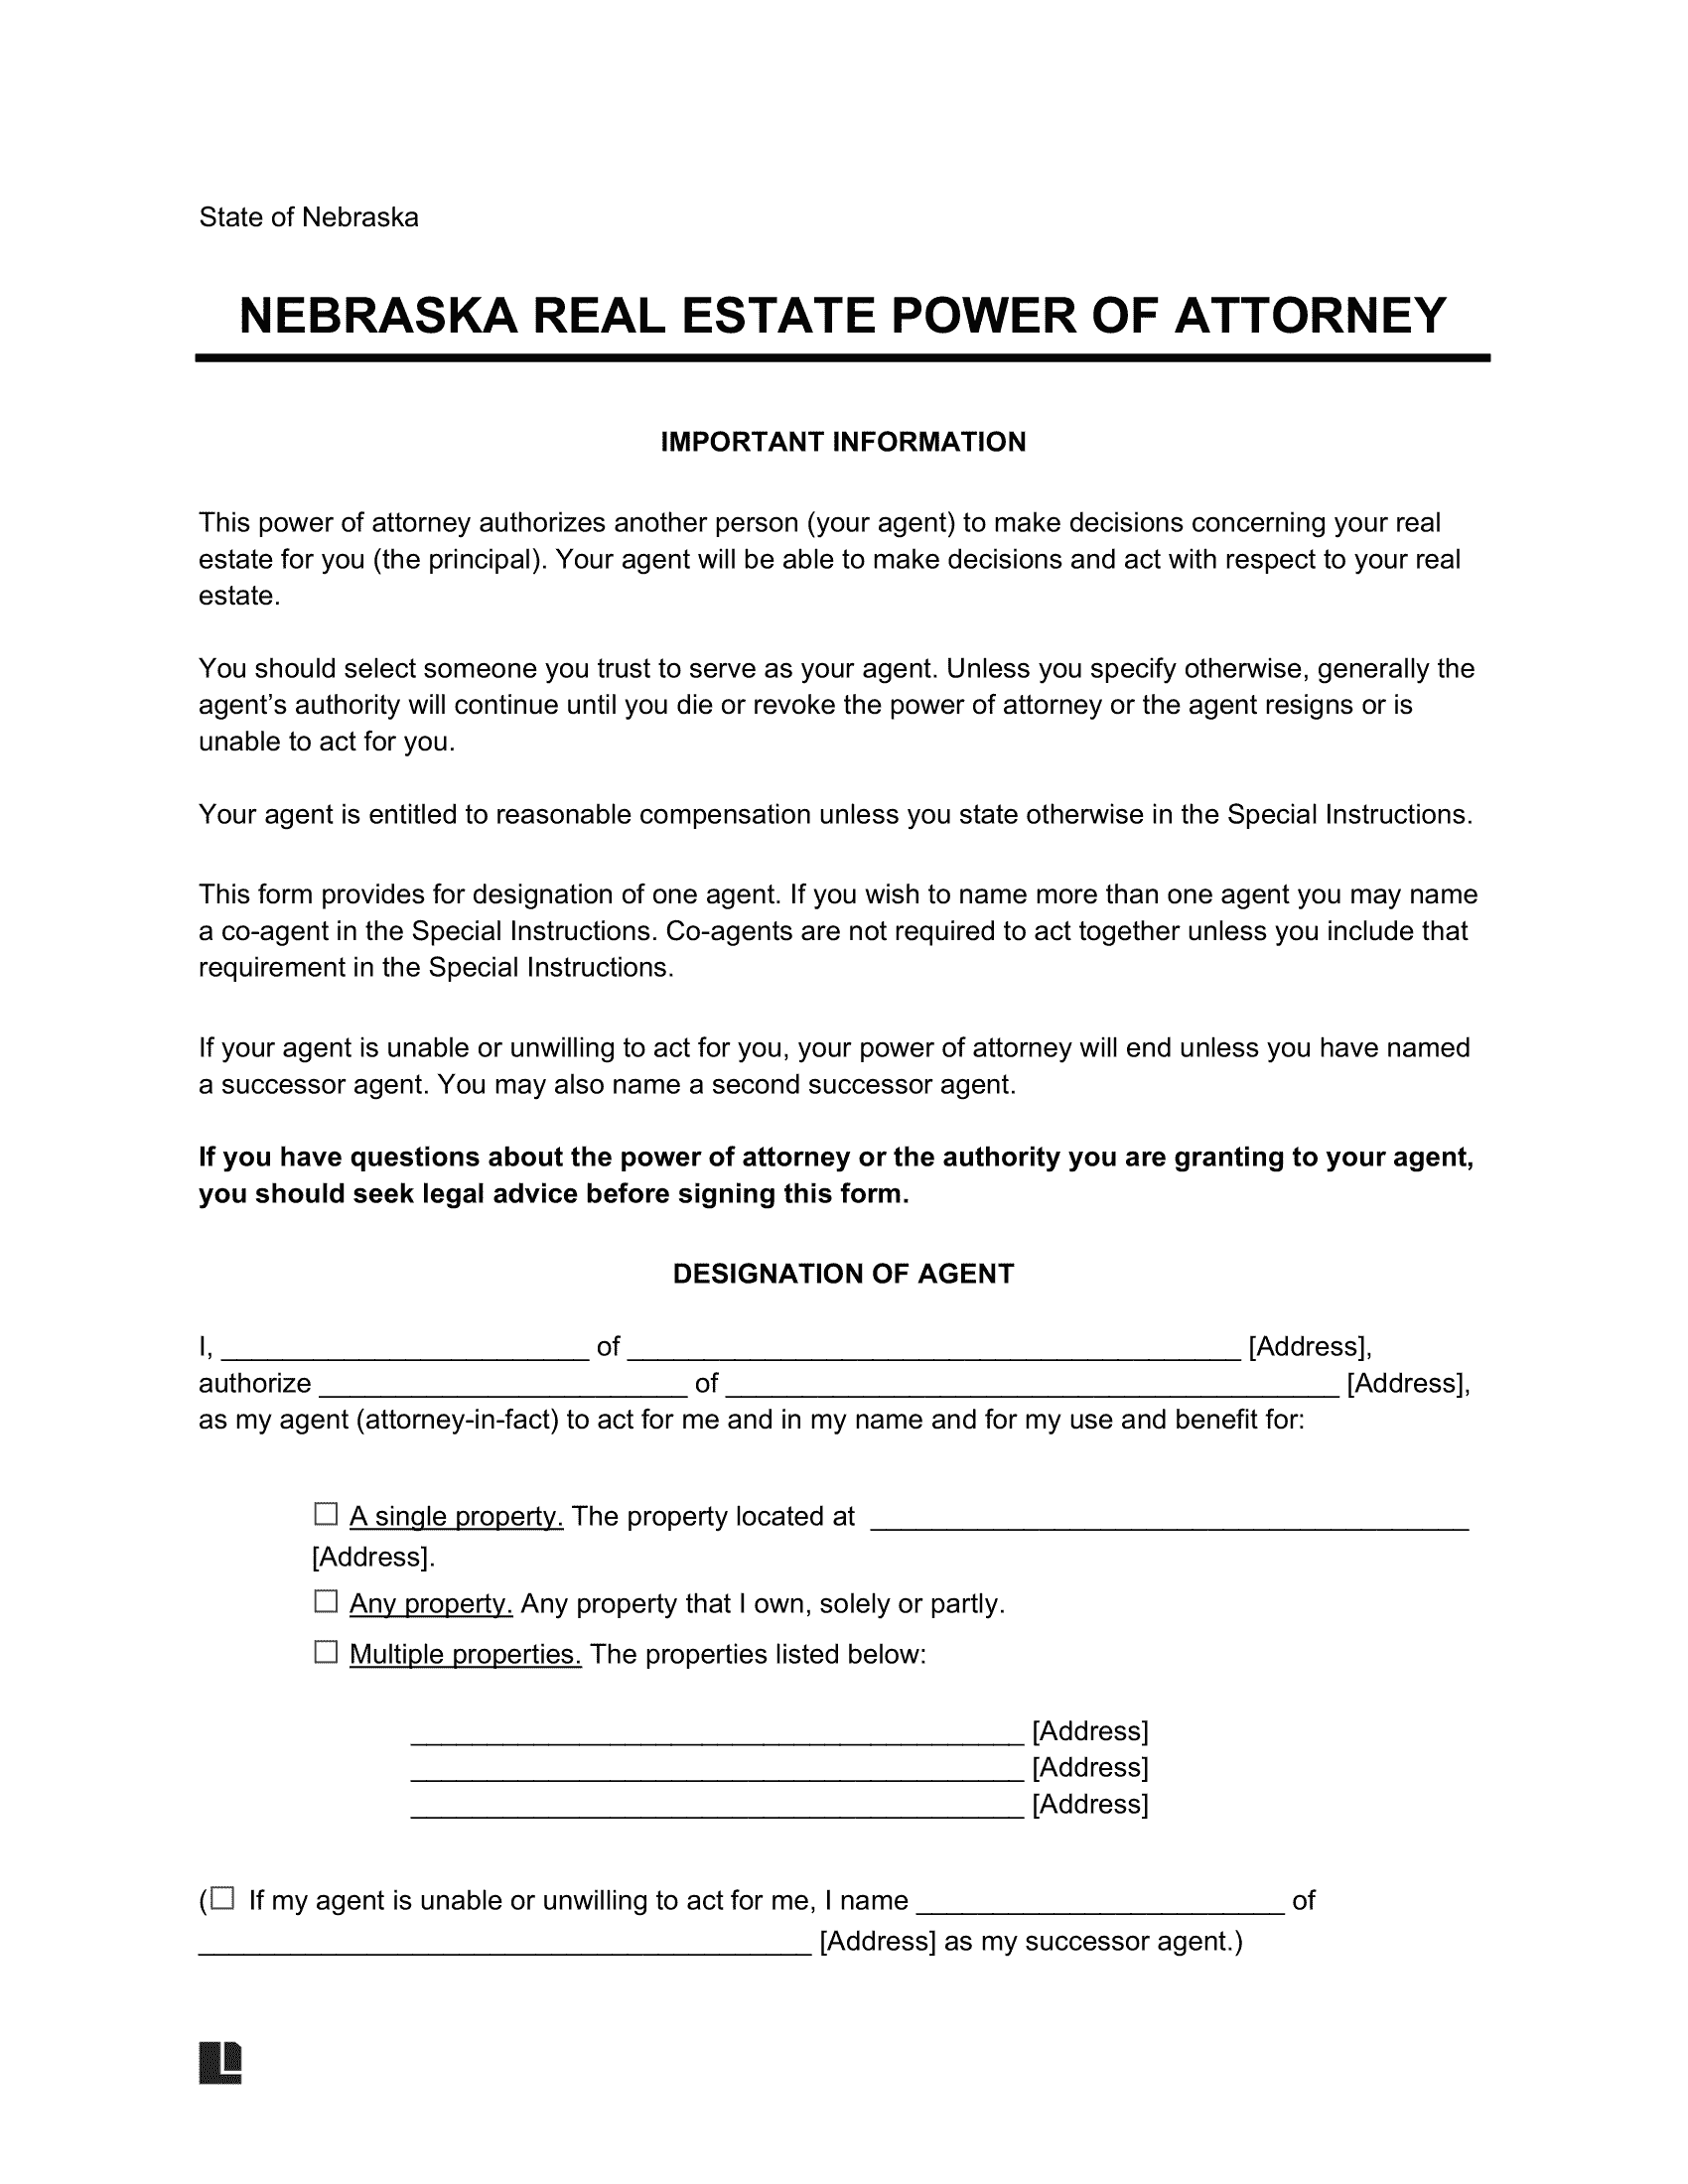 Nebraska Real Estate Power of Attorney Form